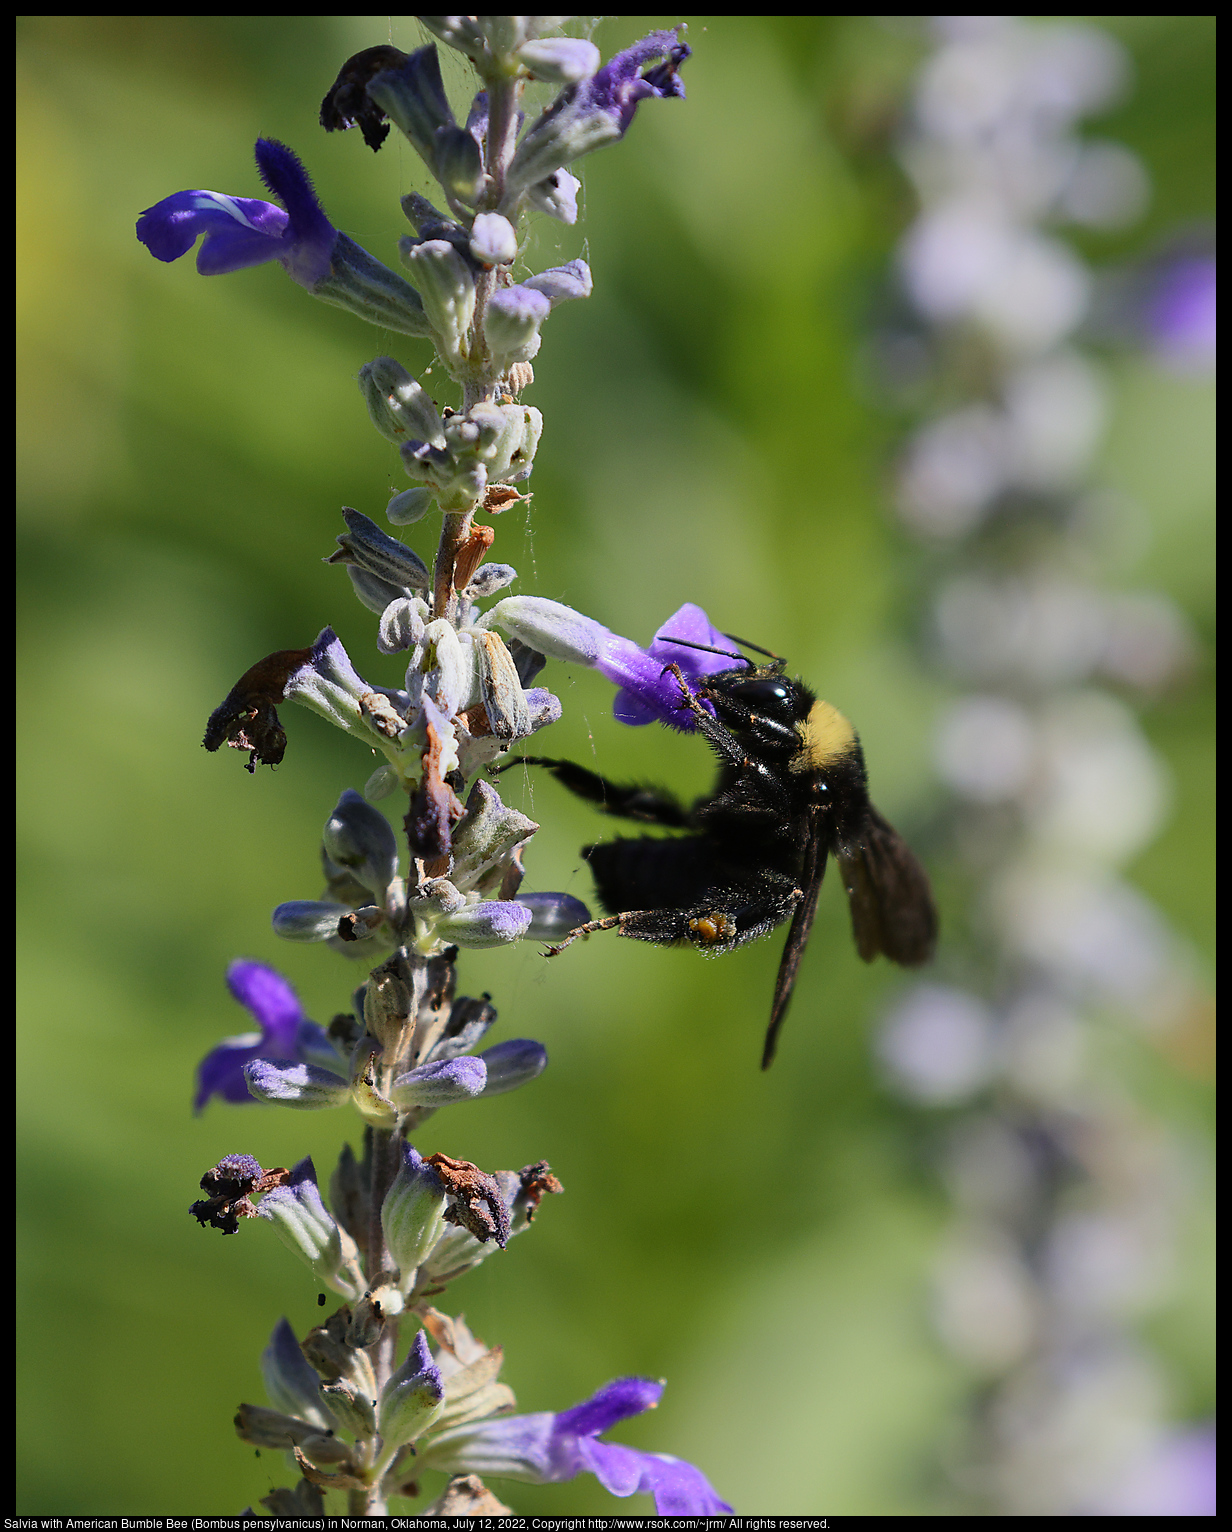 Salvia with American Bumble Bee (Bombus pensylvanicus) in Norman, Oklahoma, July 12, 2022